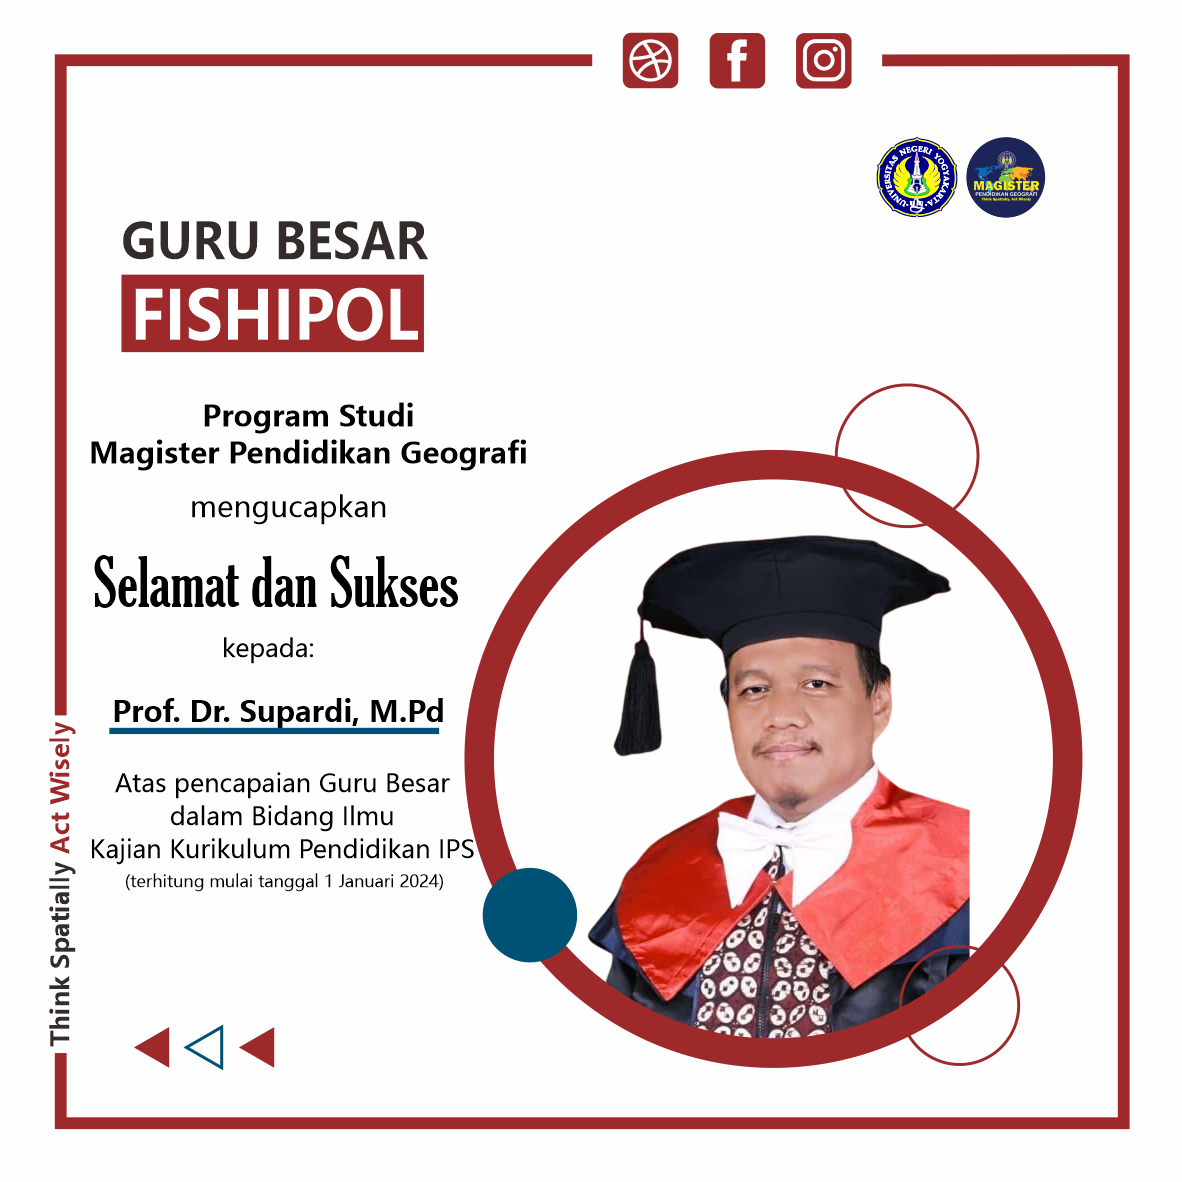 Guru Besar Prof. Dr. Supardi, M.Pd